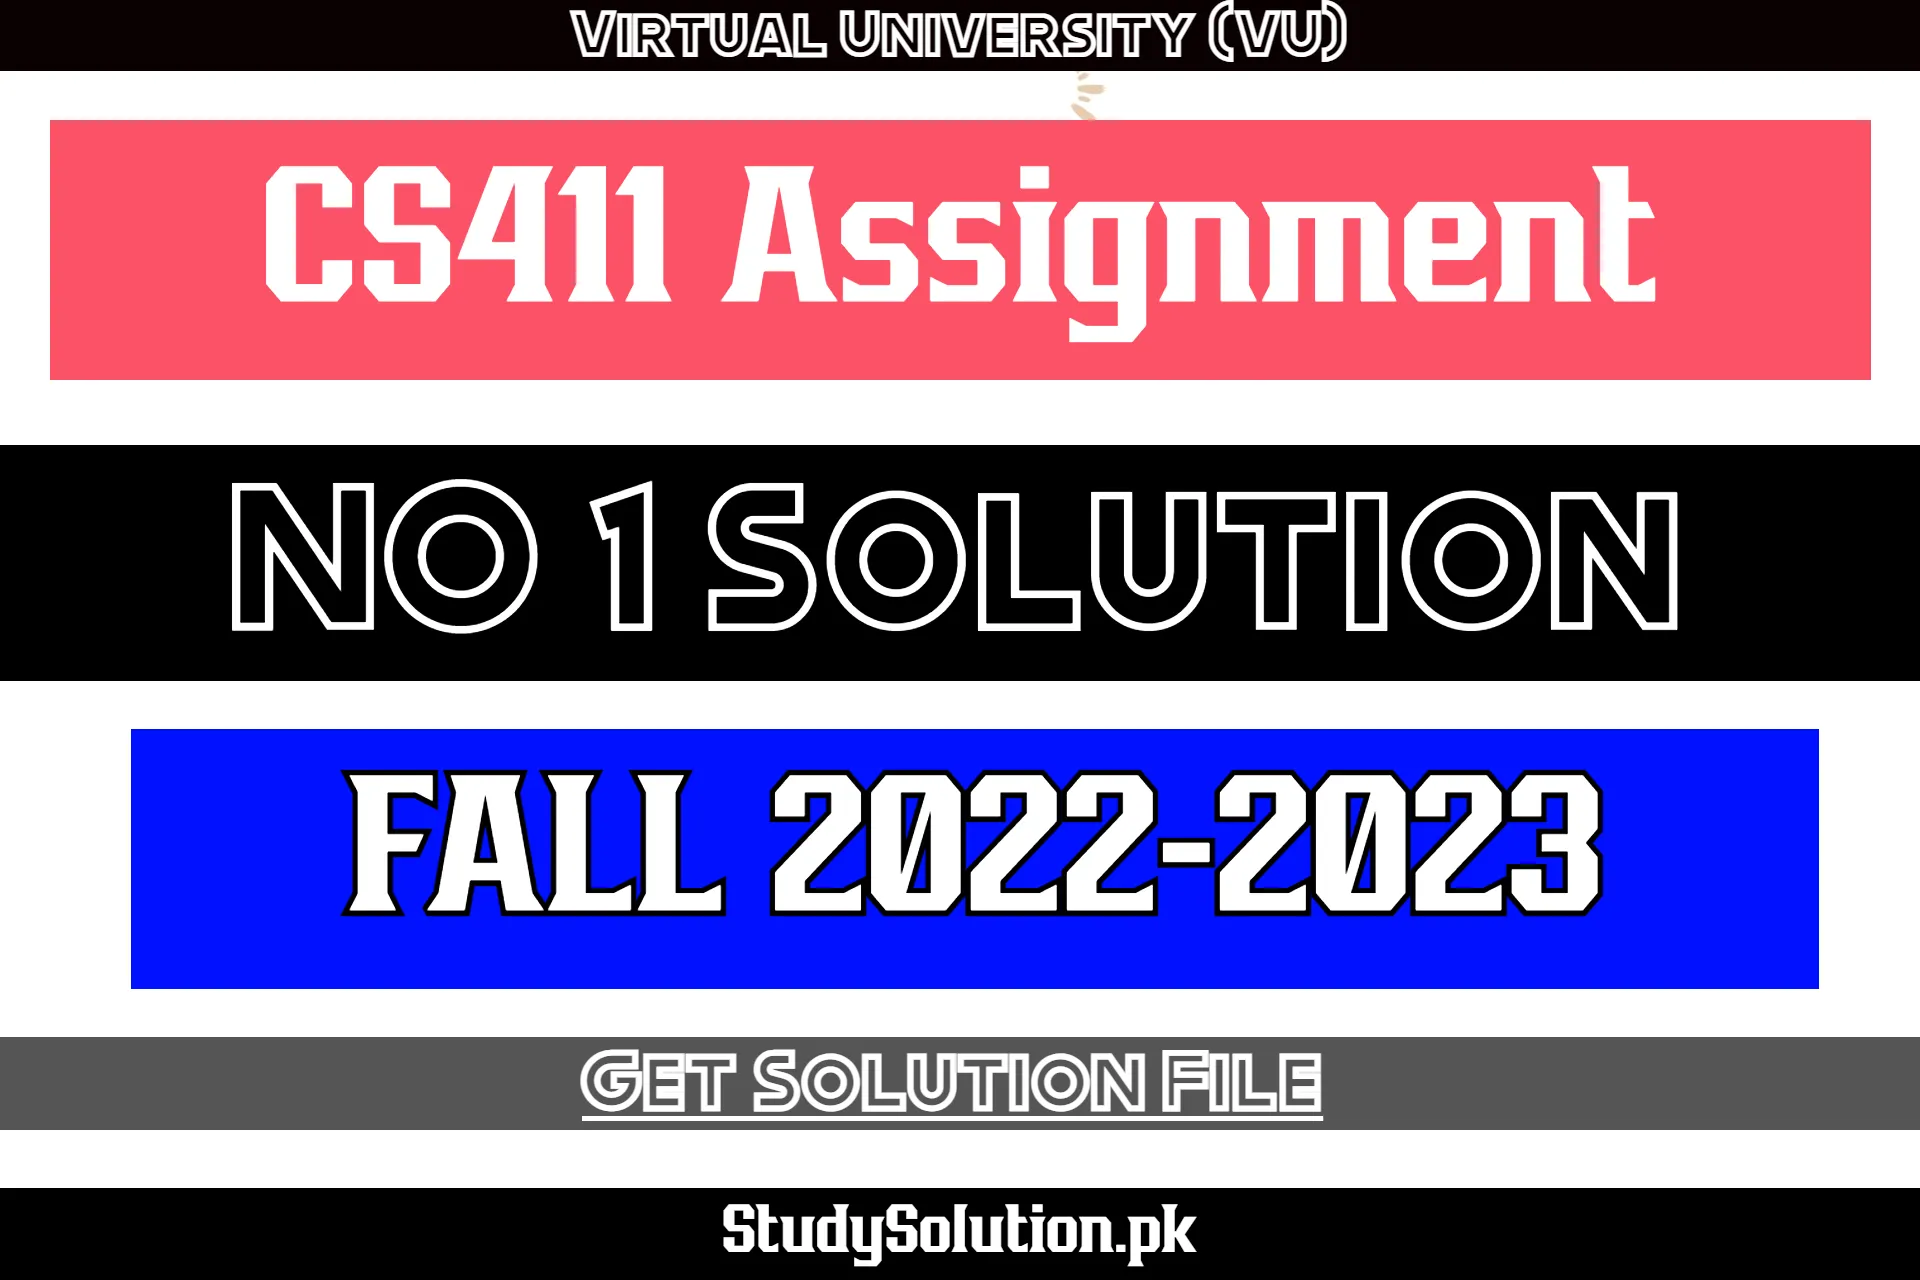 CS411 Assignment No 1 Solution Fall 2022